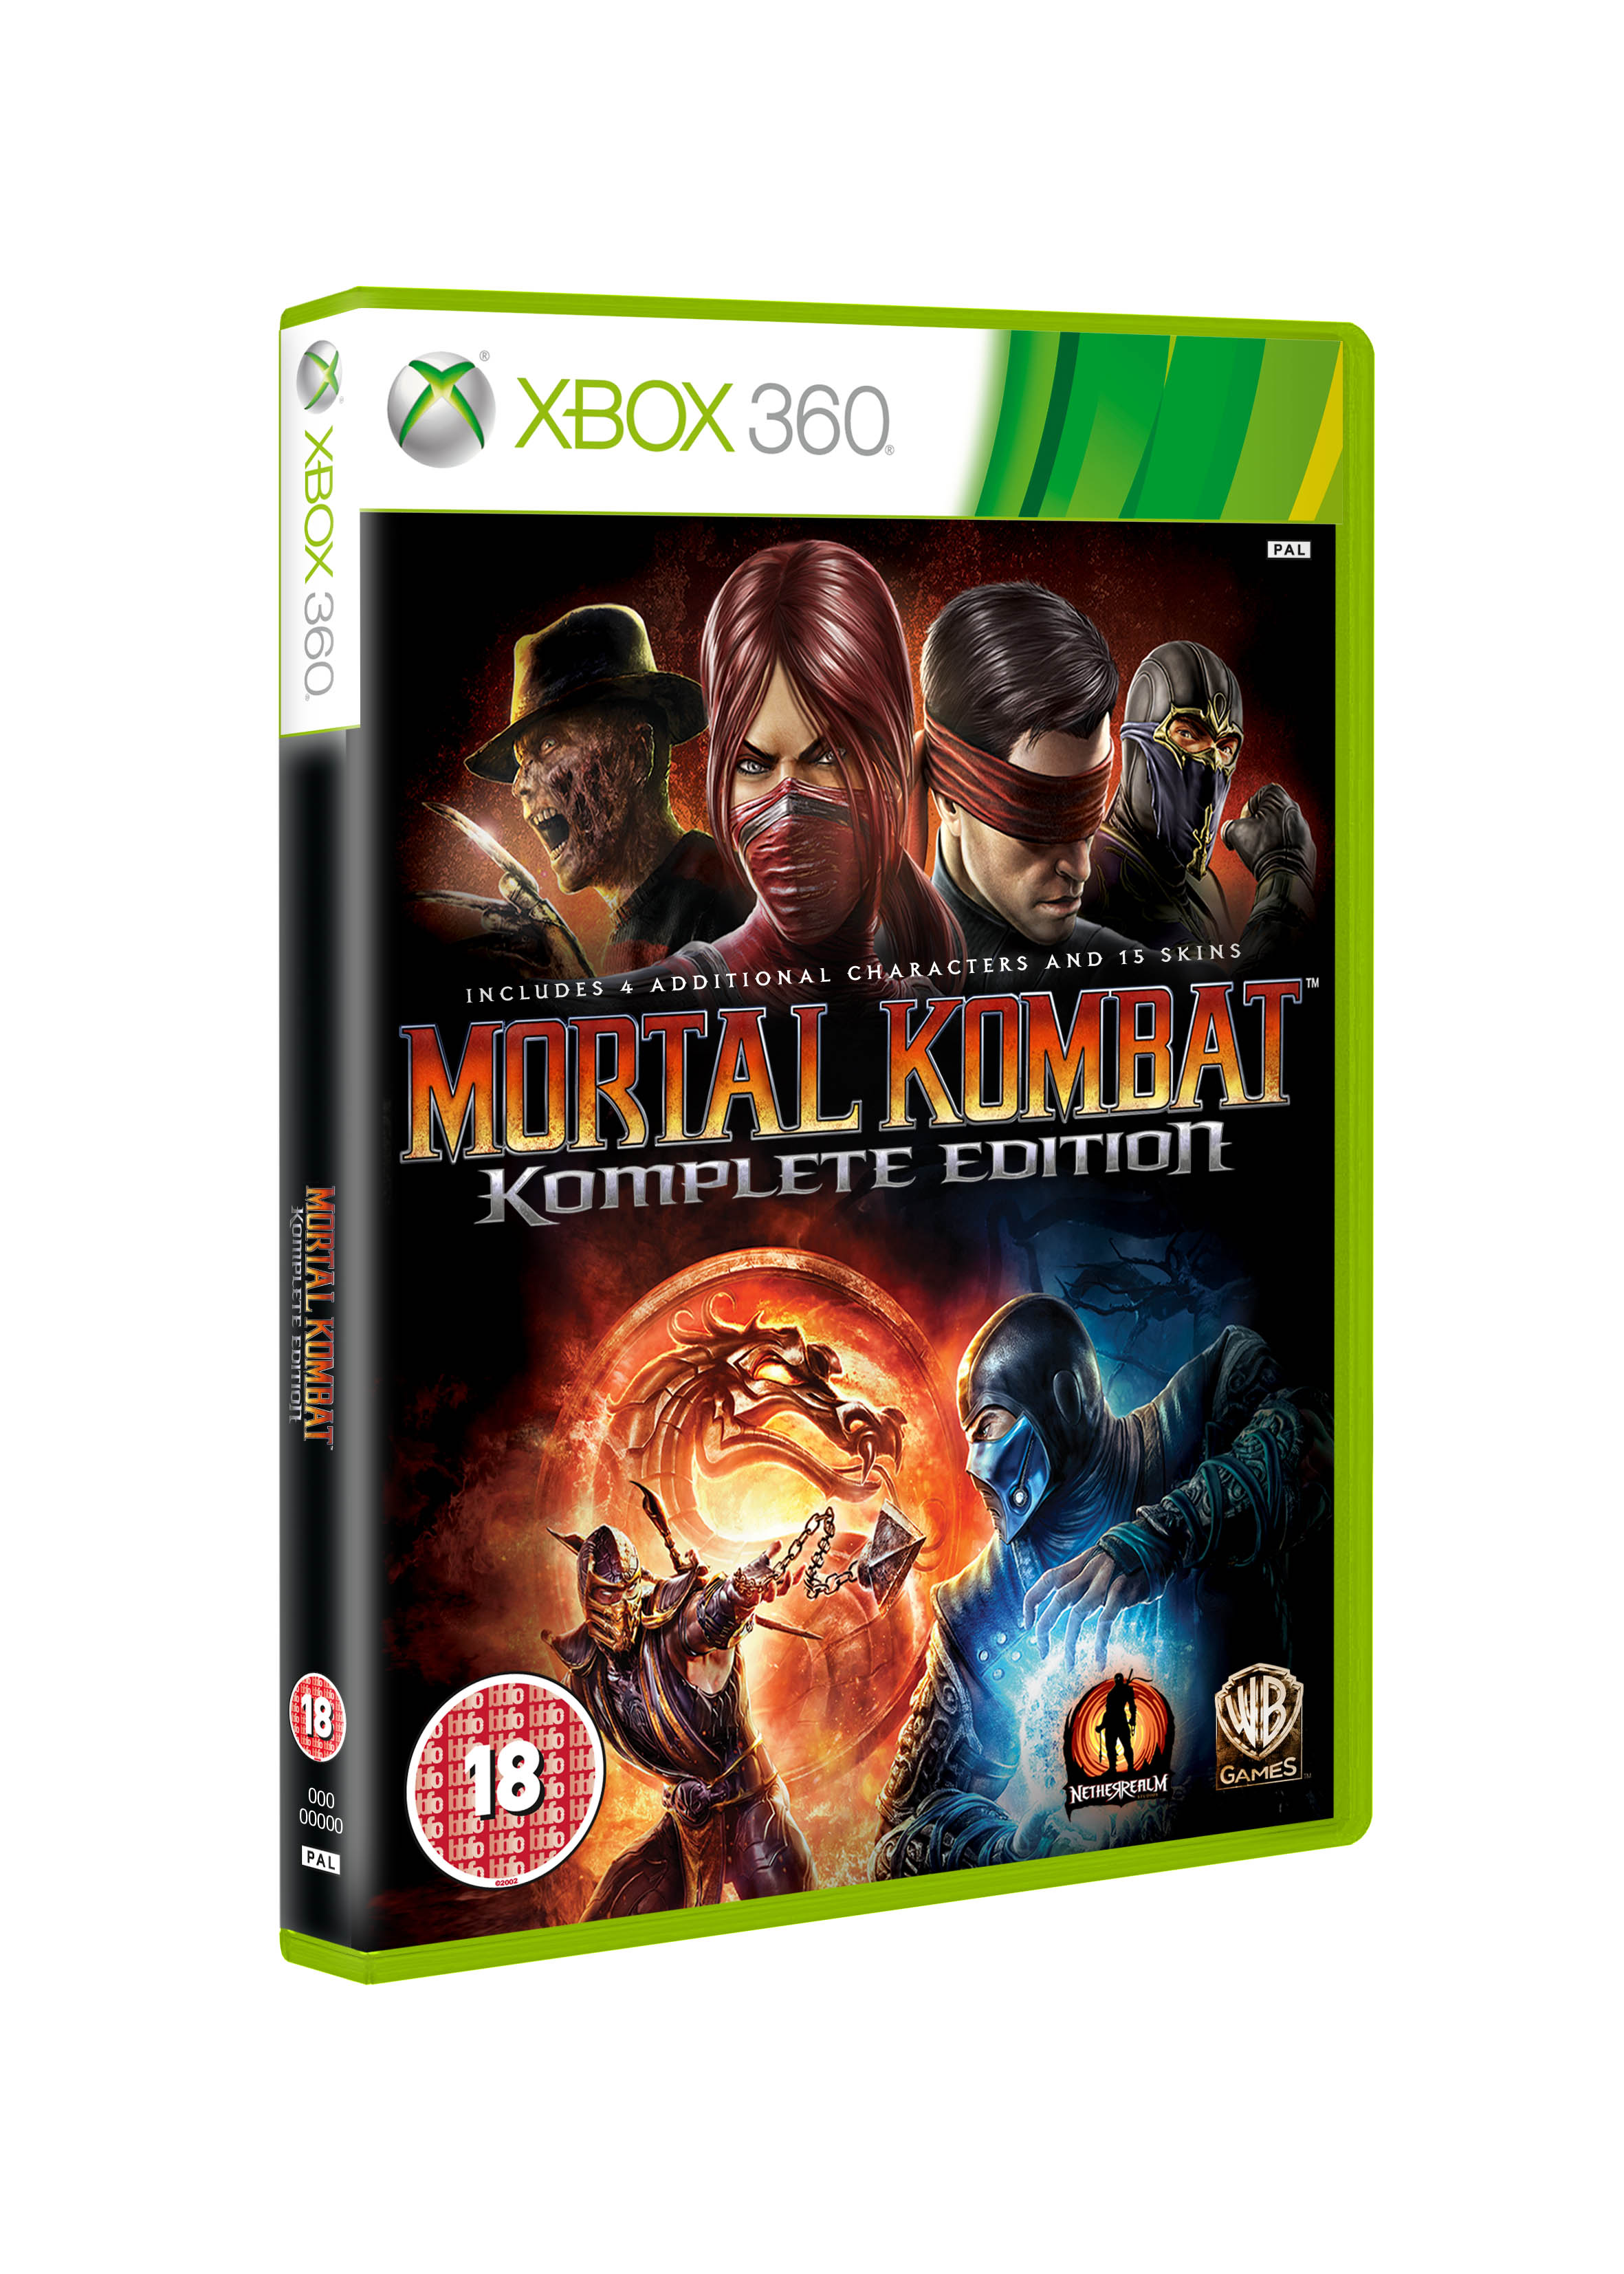 Мортал комбат на xbox 360 freeboot. MK Komplete Edition Xbox 360. Мортал комбат на иксобокс 360. Mortal Kombat Komplete Edition Xbox 360. Мартал комбат НАИКС бокс 360.